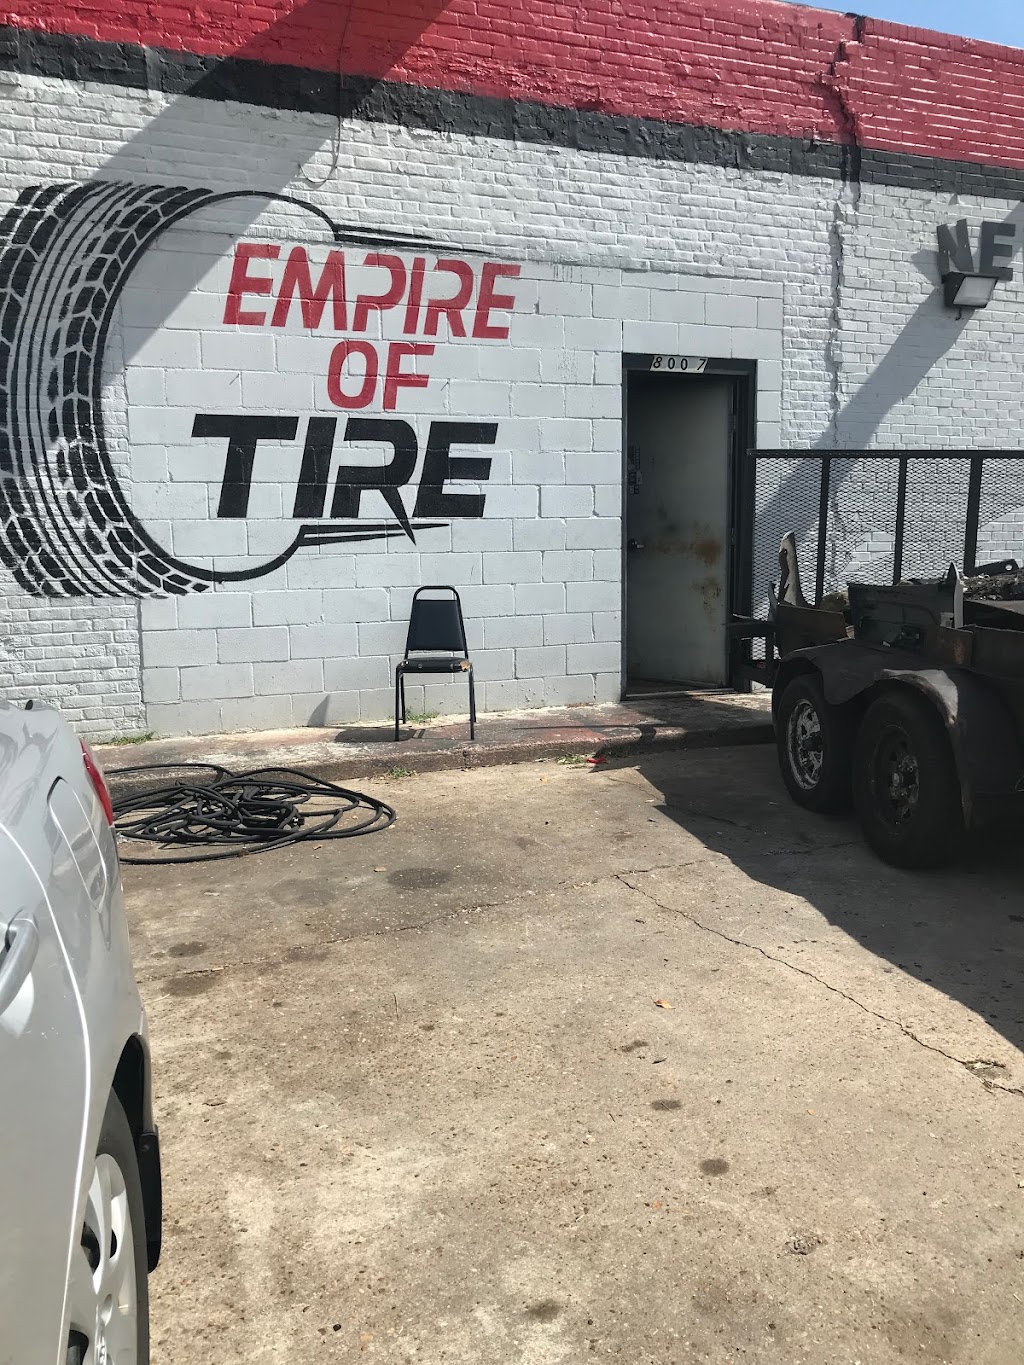 Empire of Tires | 8007 N Main St, Jacksonville, FL 32208, USA | Phone: (904) 236-7165